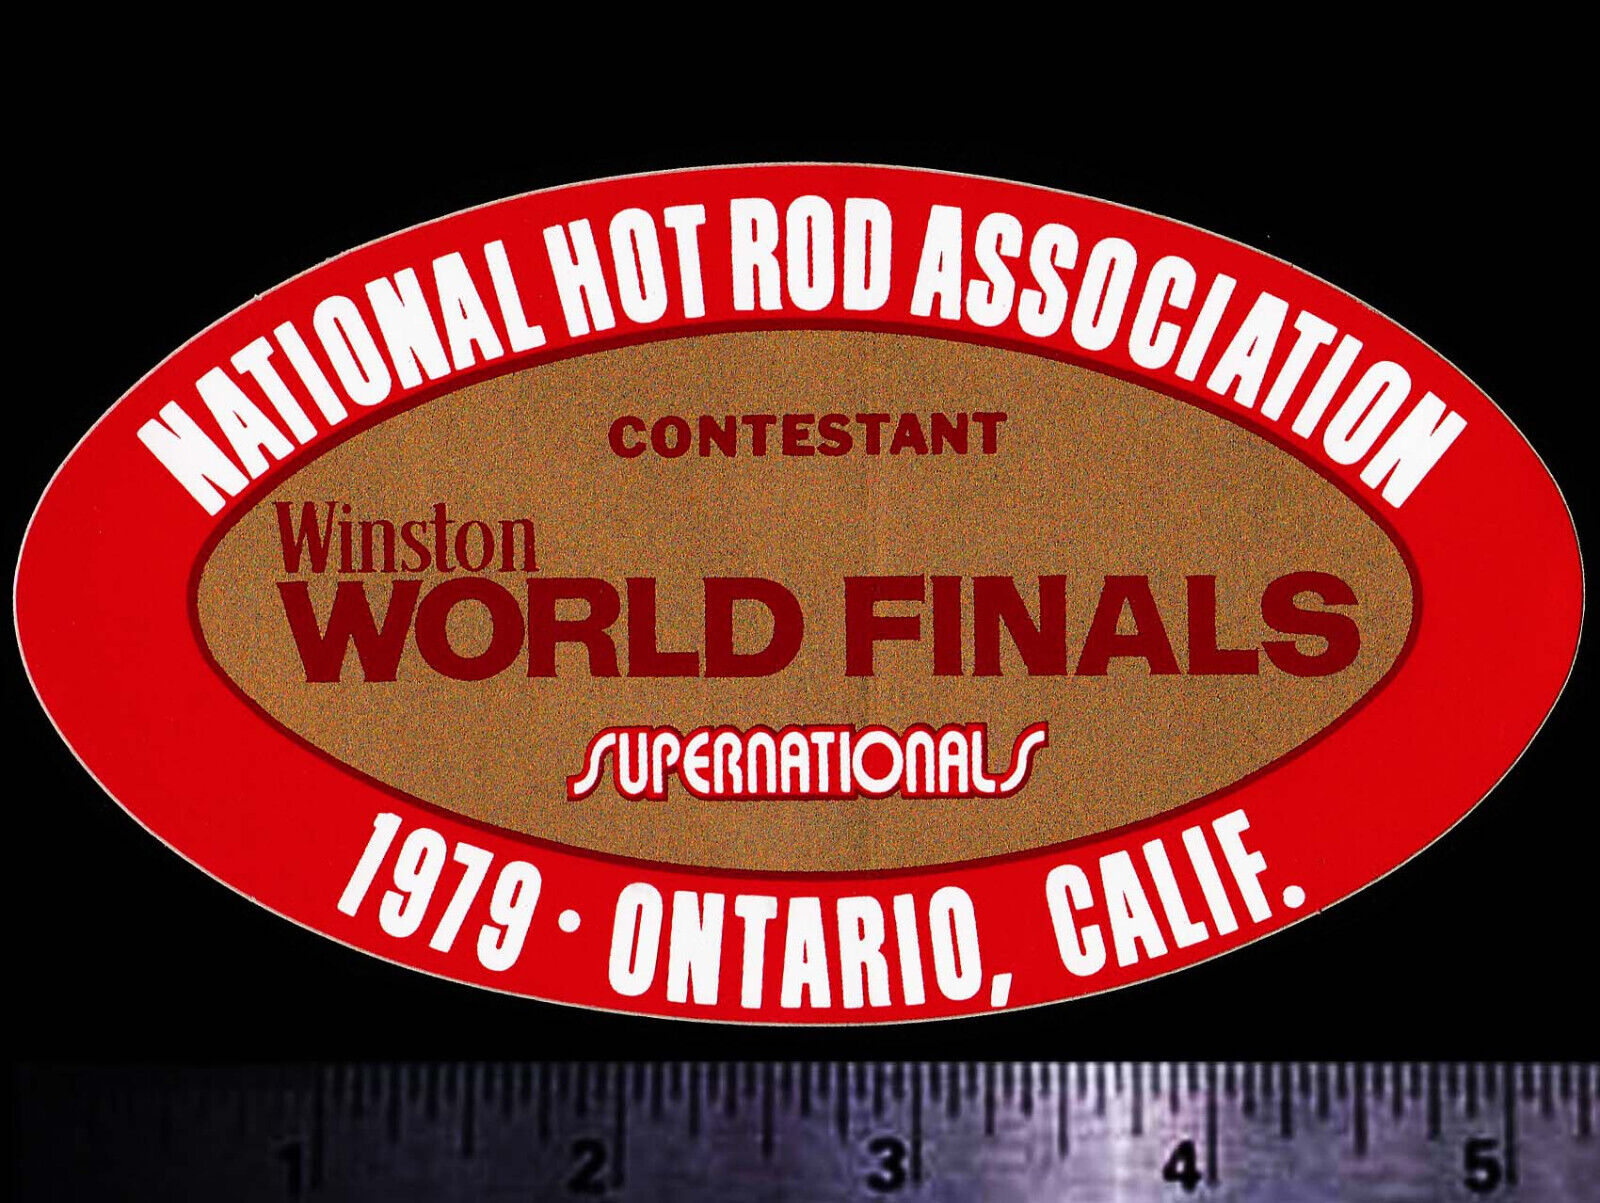 NHRA Winston World Finals Ontario, Calif. 1979 Orig Vintage Racing Decal/Sticker